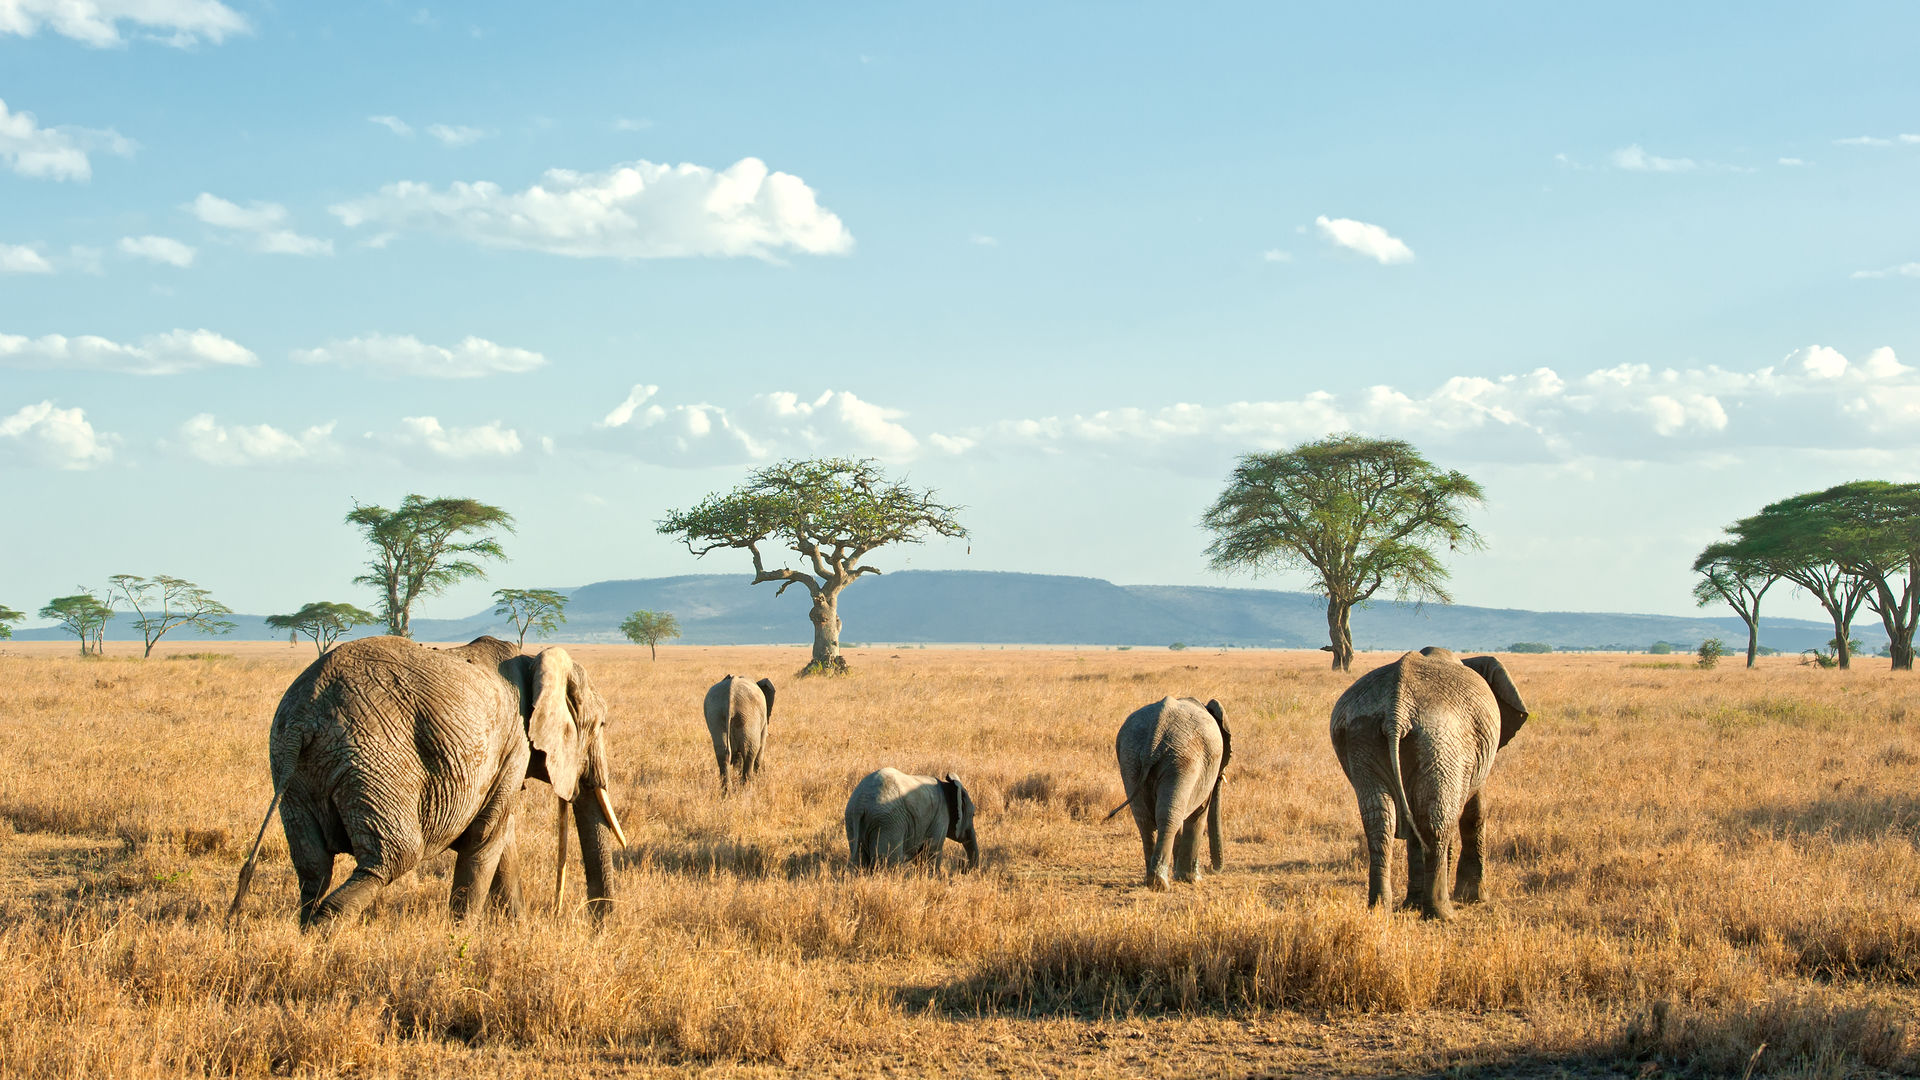 Wildlife on the Serengeti